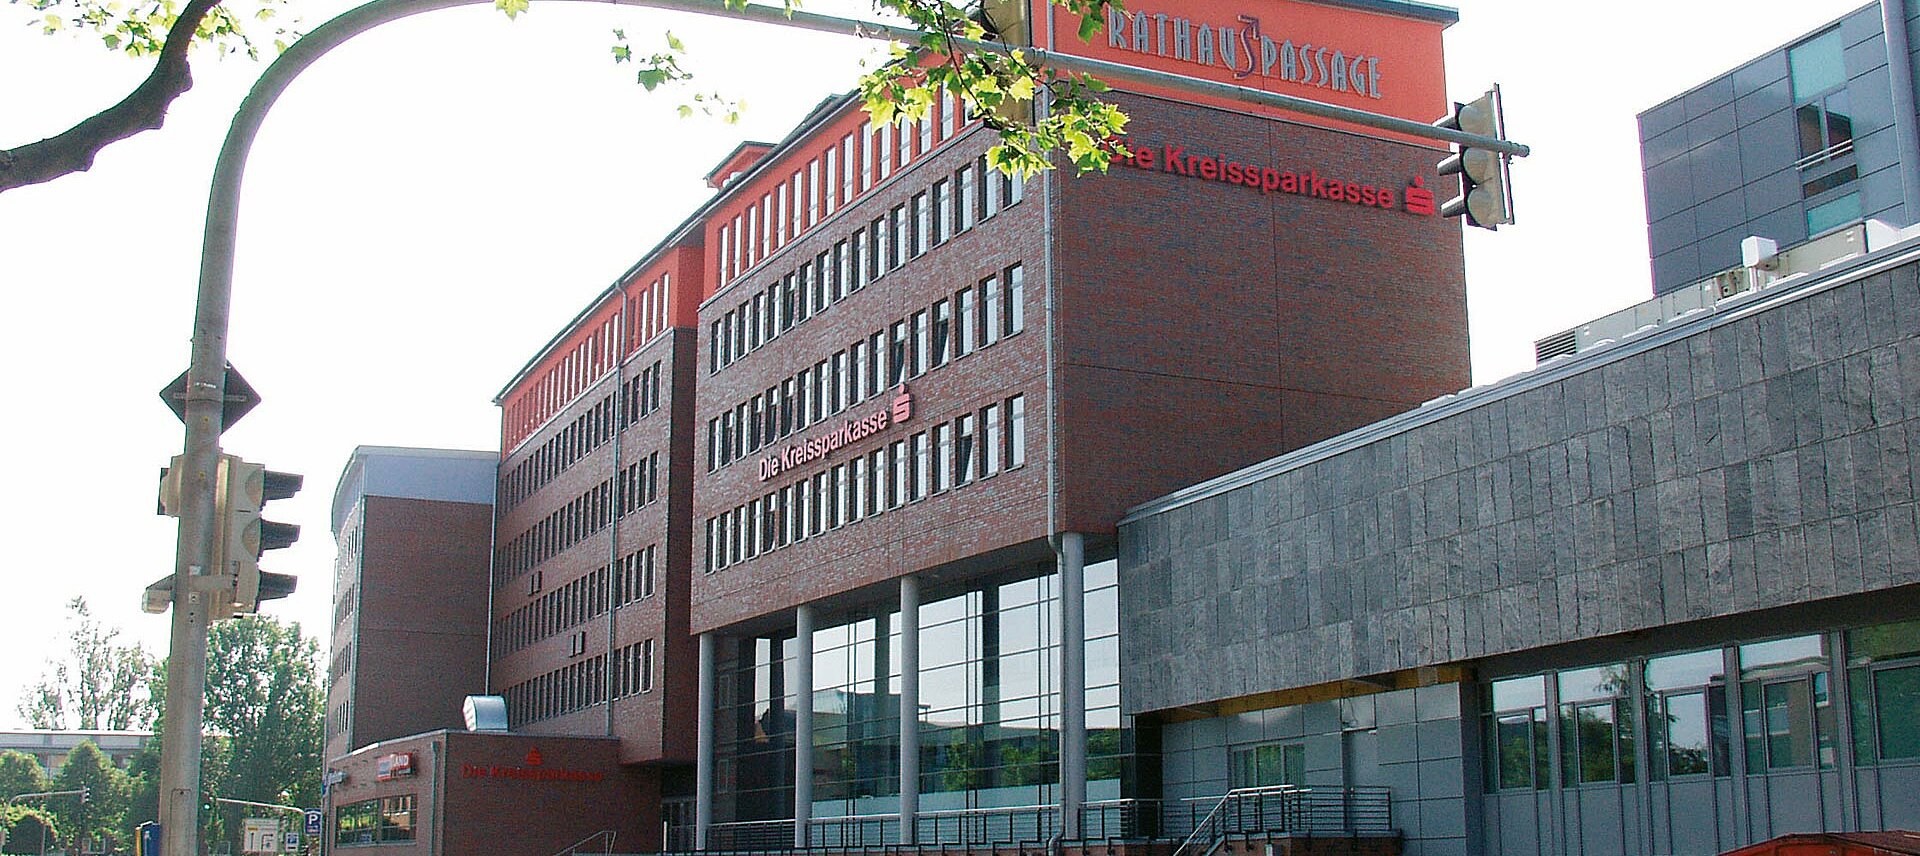 Pinnenberg Rathauspassage Kreissparkasse AVW Projekt